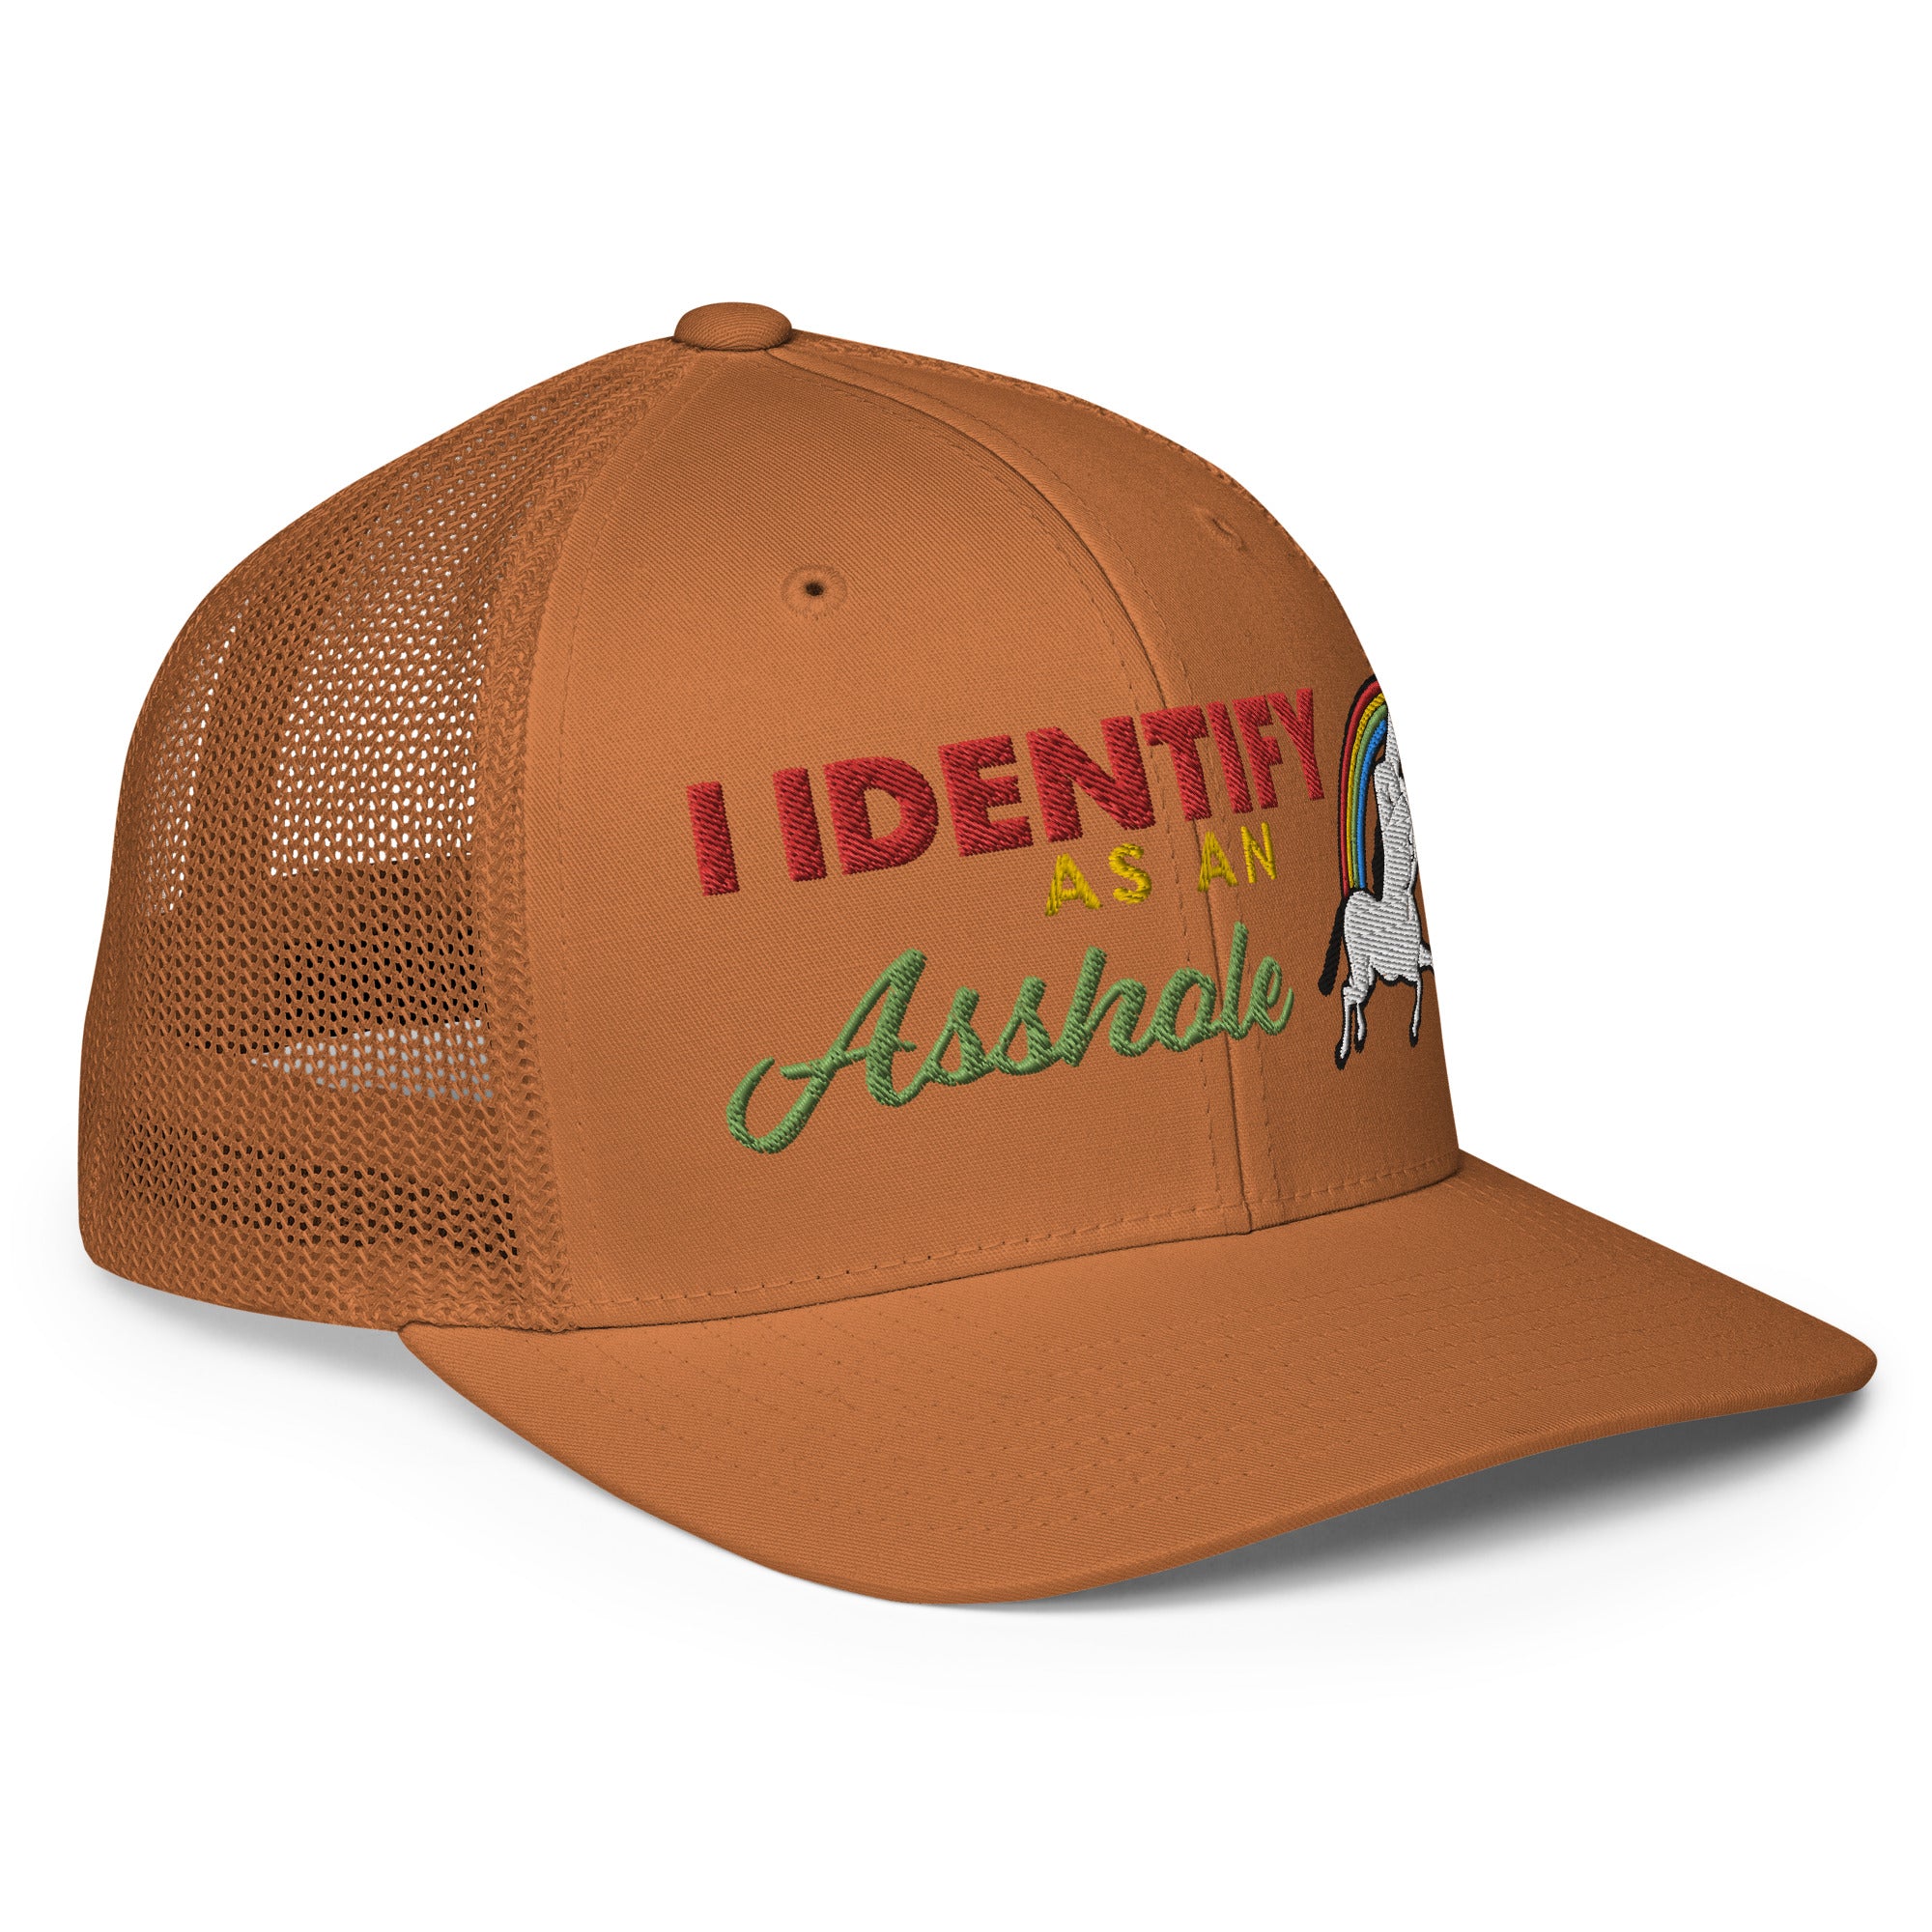 I Identify as An Asshole FUunicorn Flexfit Mesh Trucker Hat